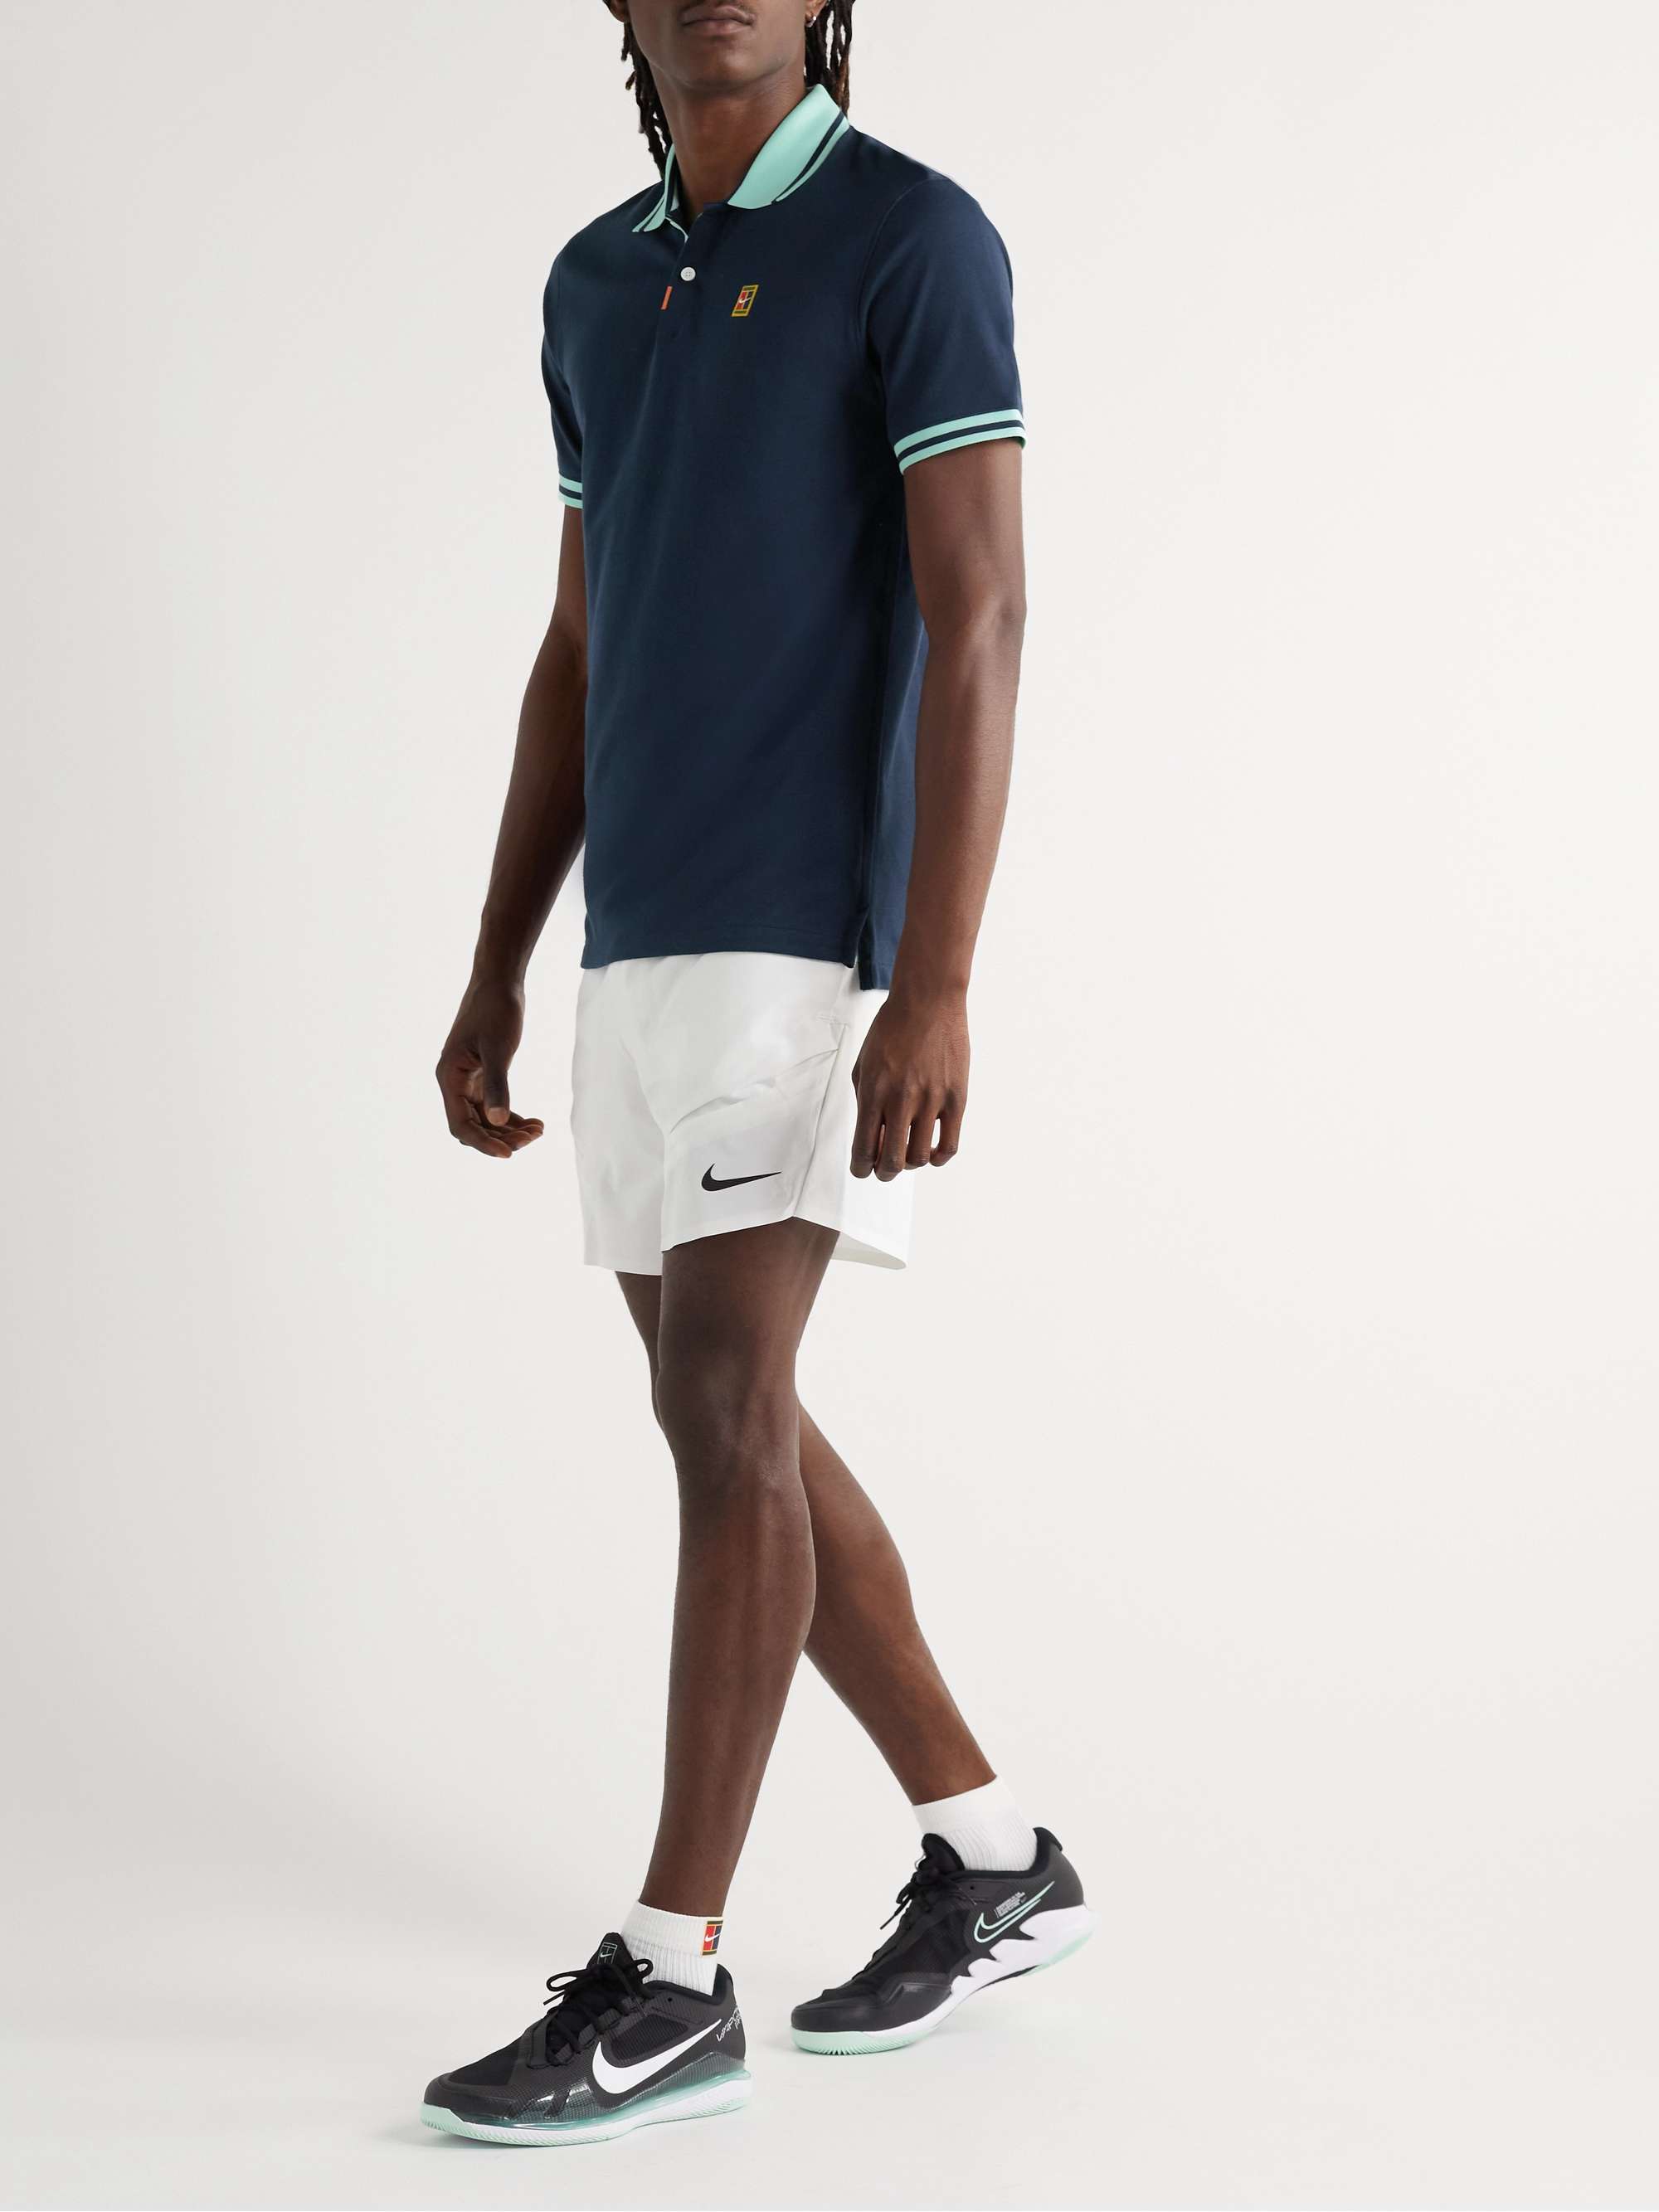 ga werken Induceren Geweldig NIKE TENNIS Heritage Slim-Fit Colour-Block Dri-FIT Piqué Tennis Shirt | MR  PORTER